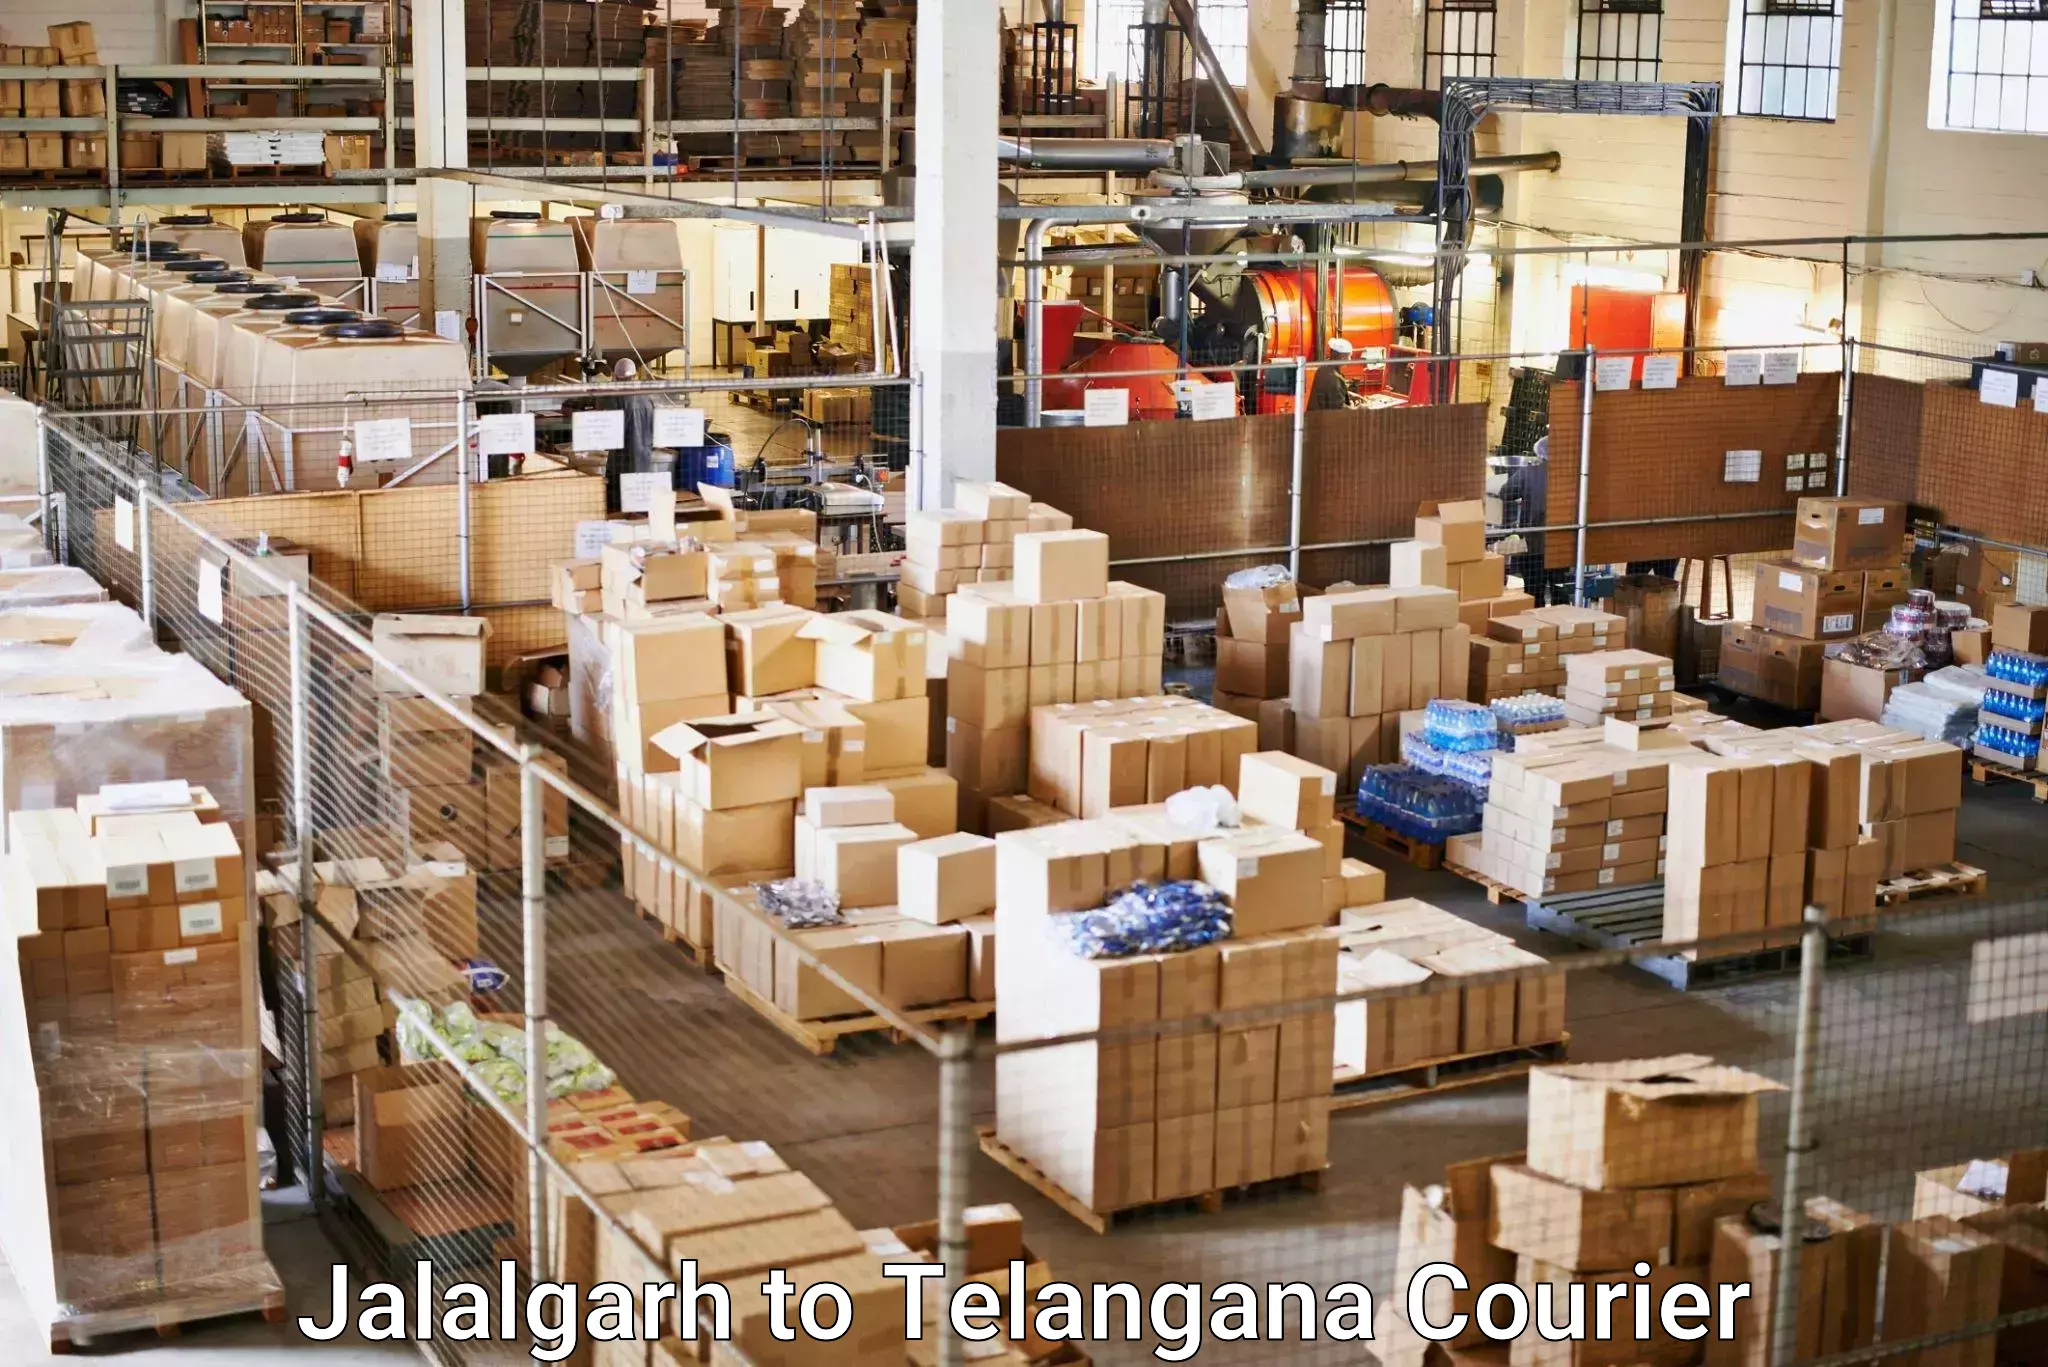 Logistics service provider Jalalgarh to Yellareddy